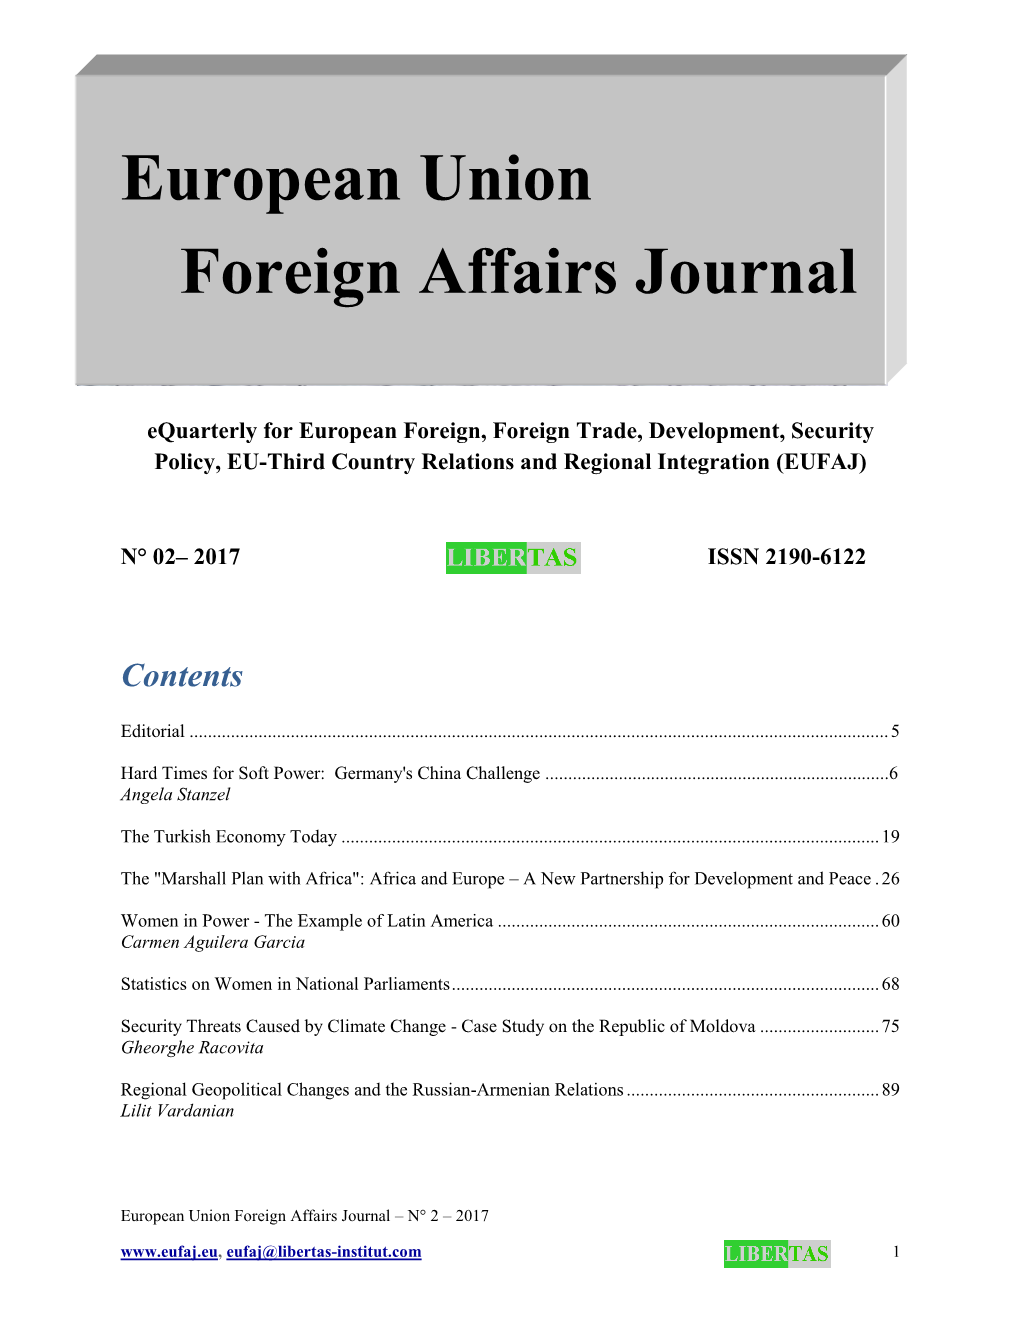 European Union Foreign Affairs Journal